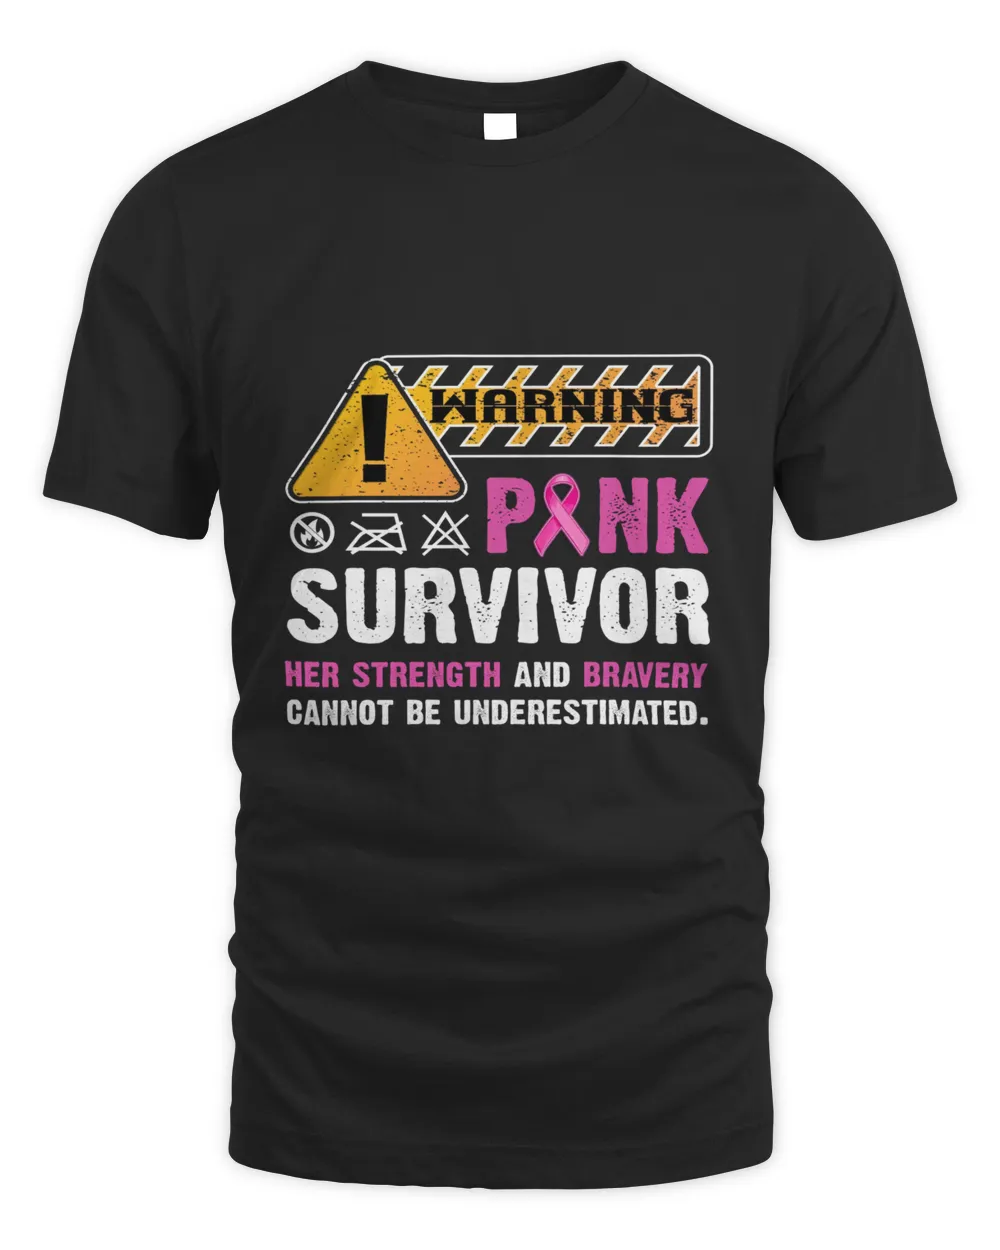 Breast Cancer Awareness Survivor Wear Pink Warning Pink Survivor Survivor October